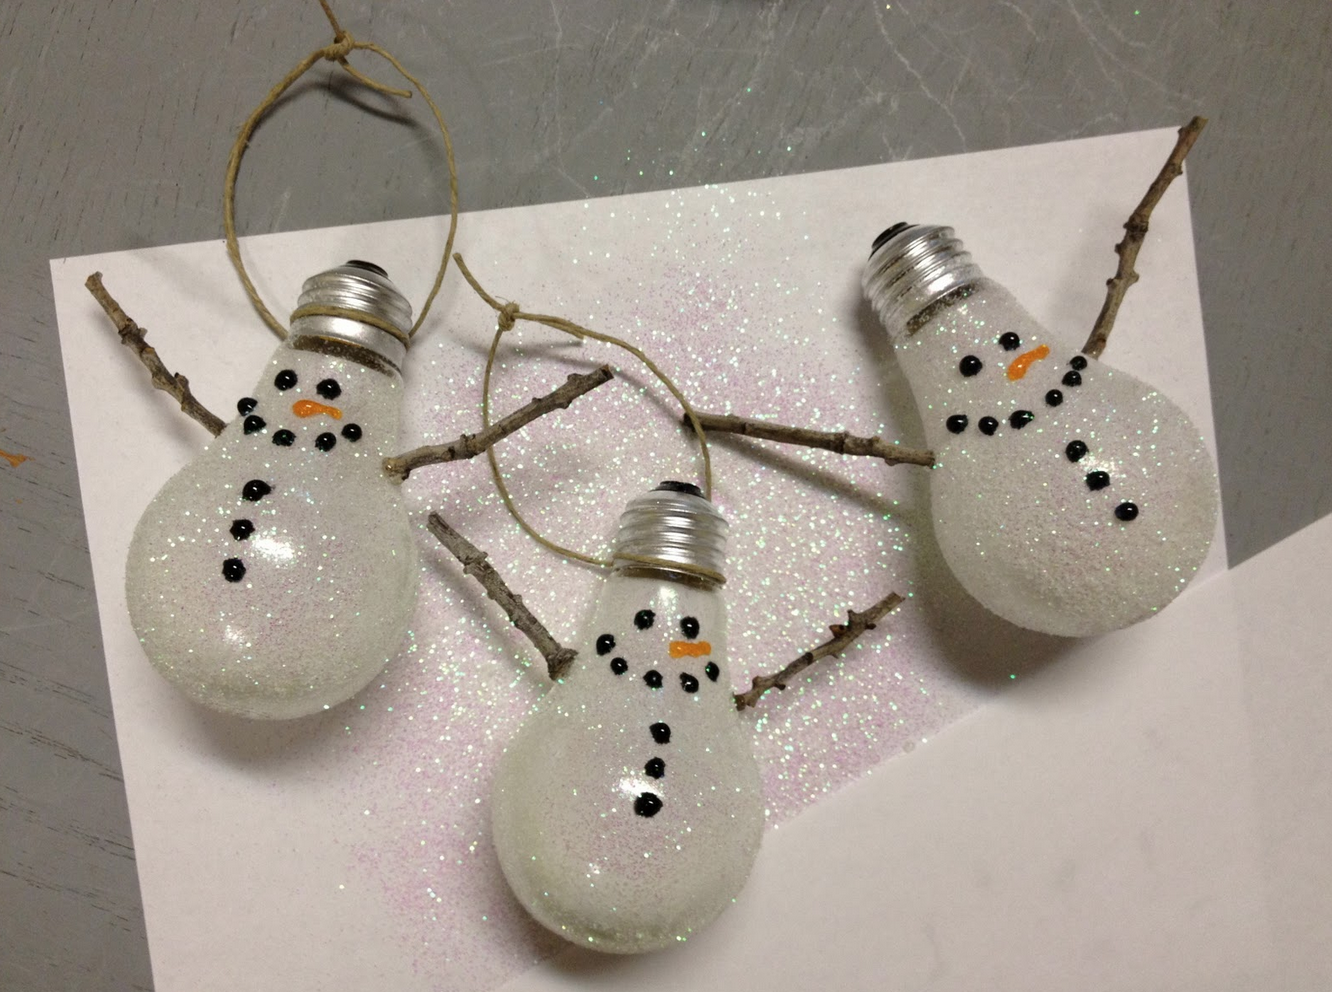 Snowman Lightbulb Ornament